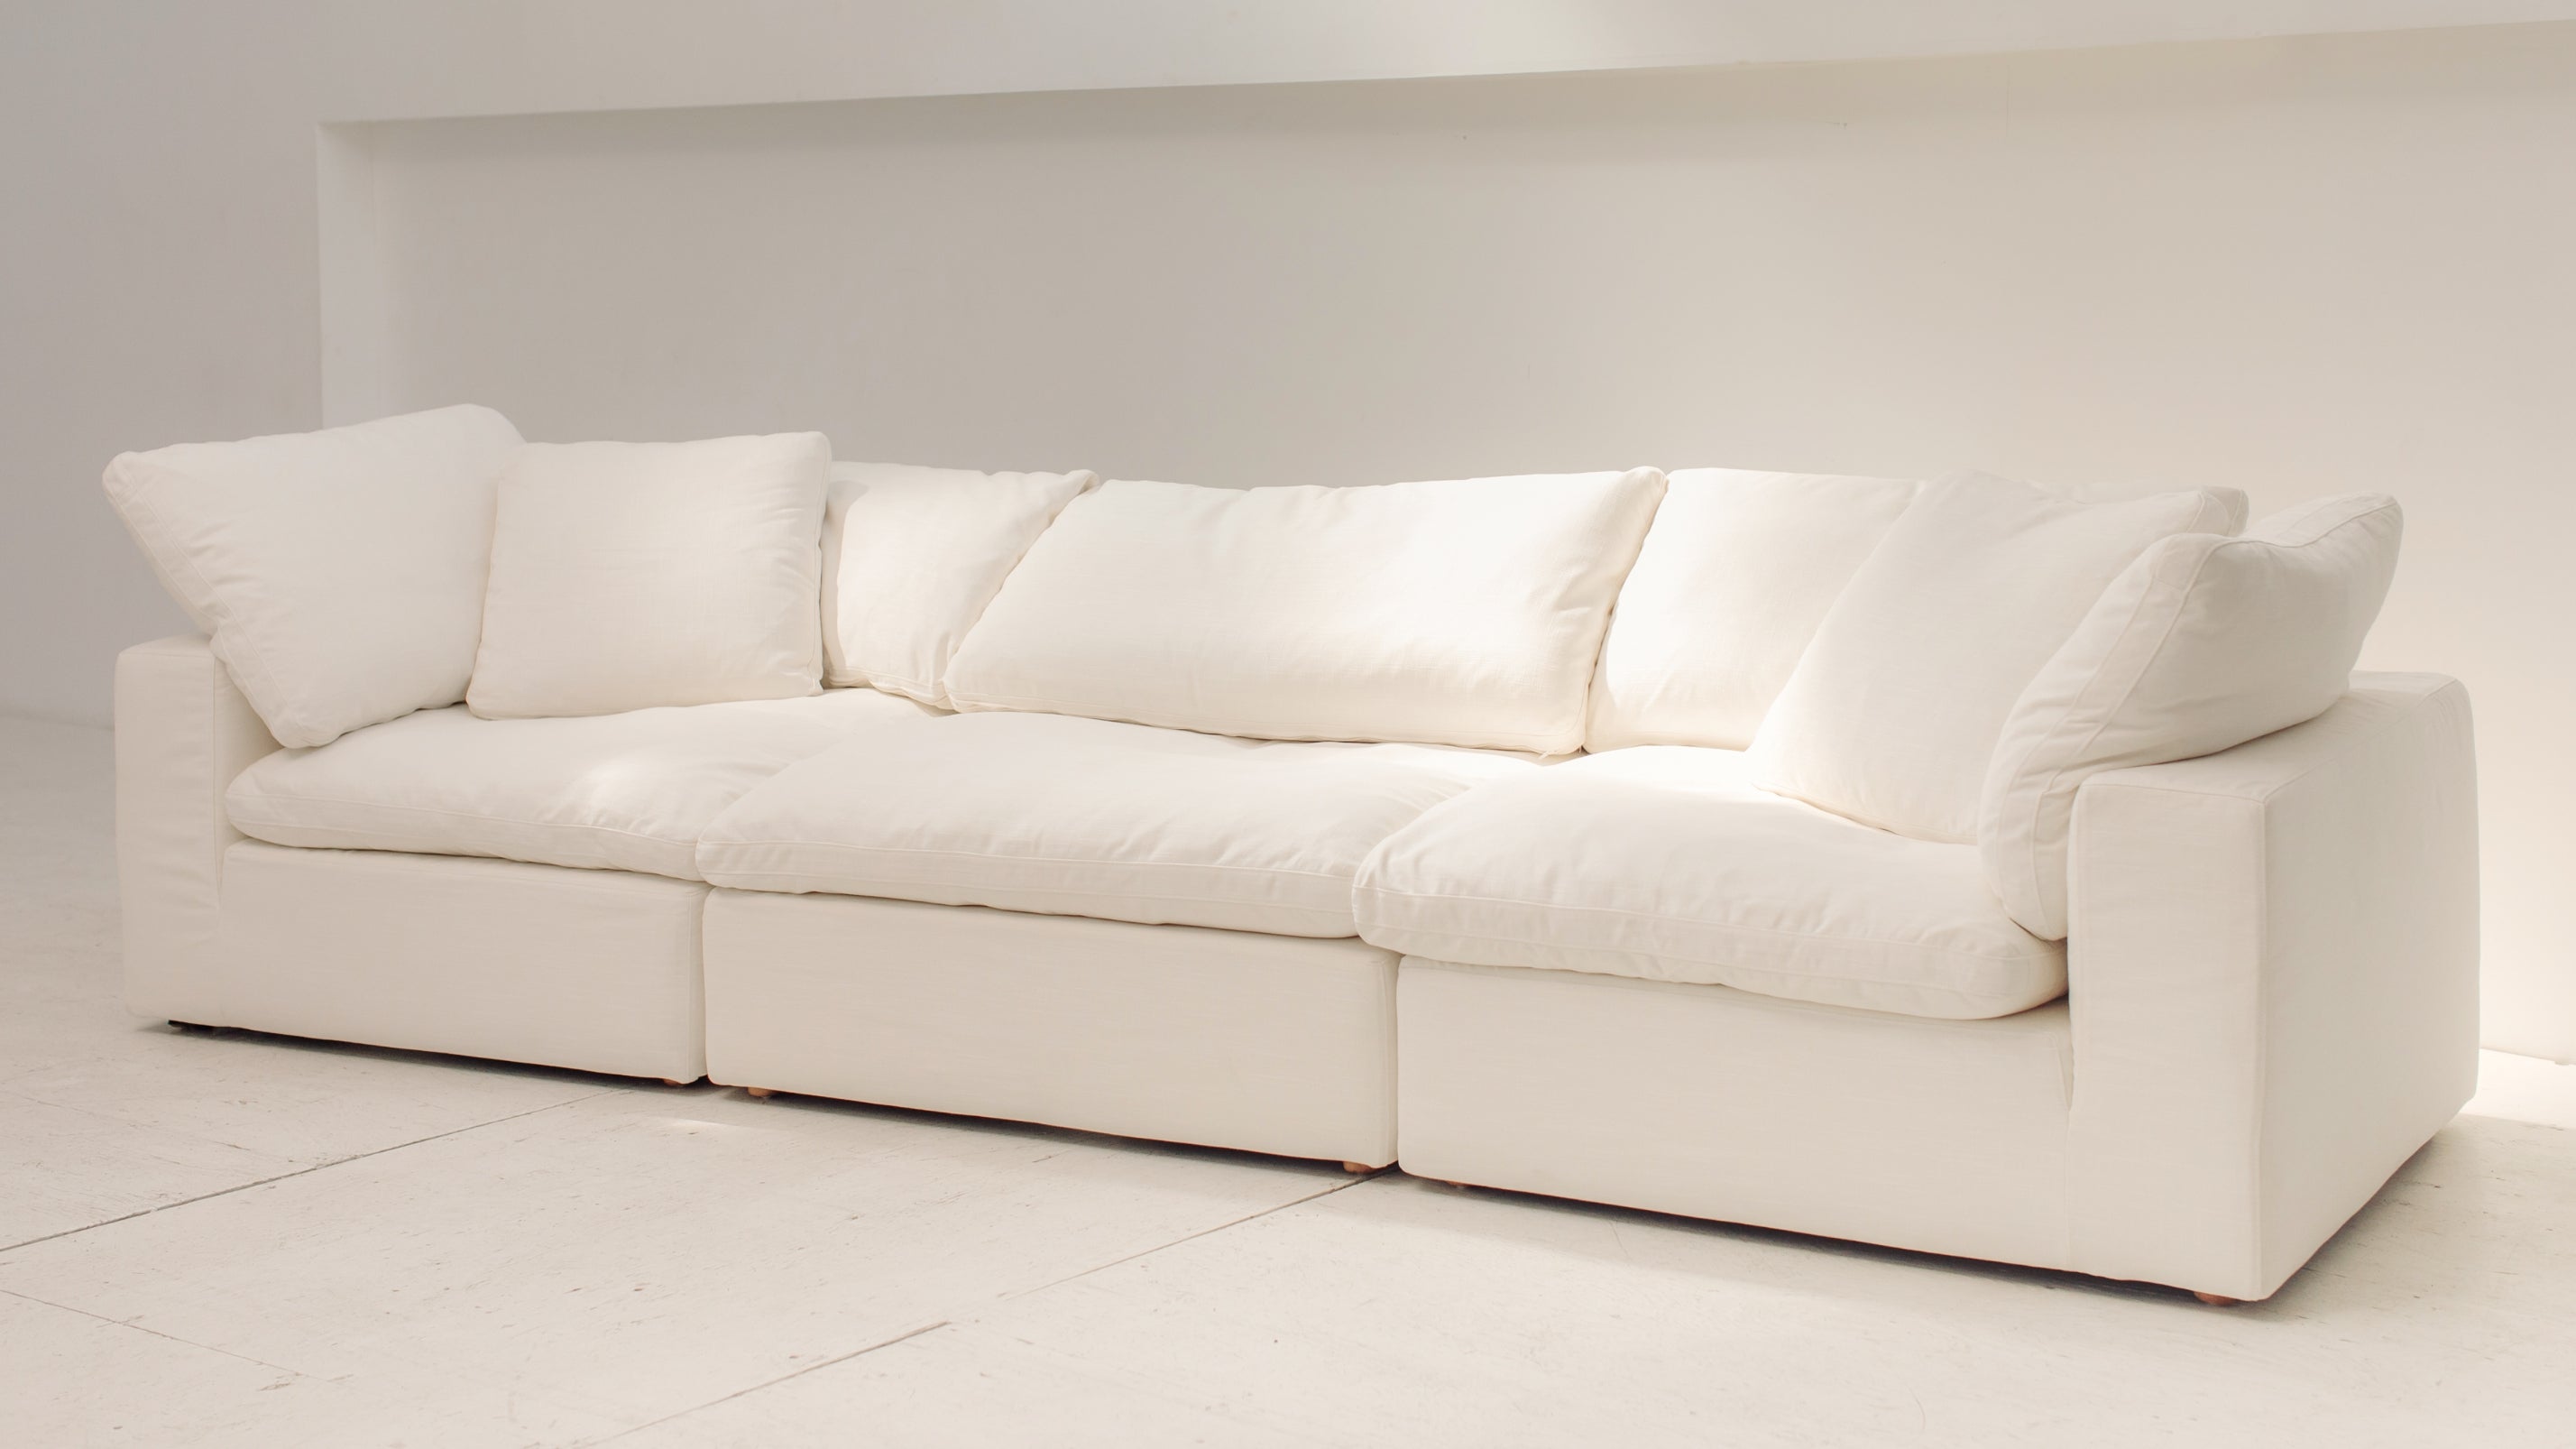 Movie Night™ 3-Piece Modular Sofa, Large, Cream Linen - Image 4